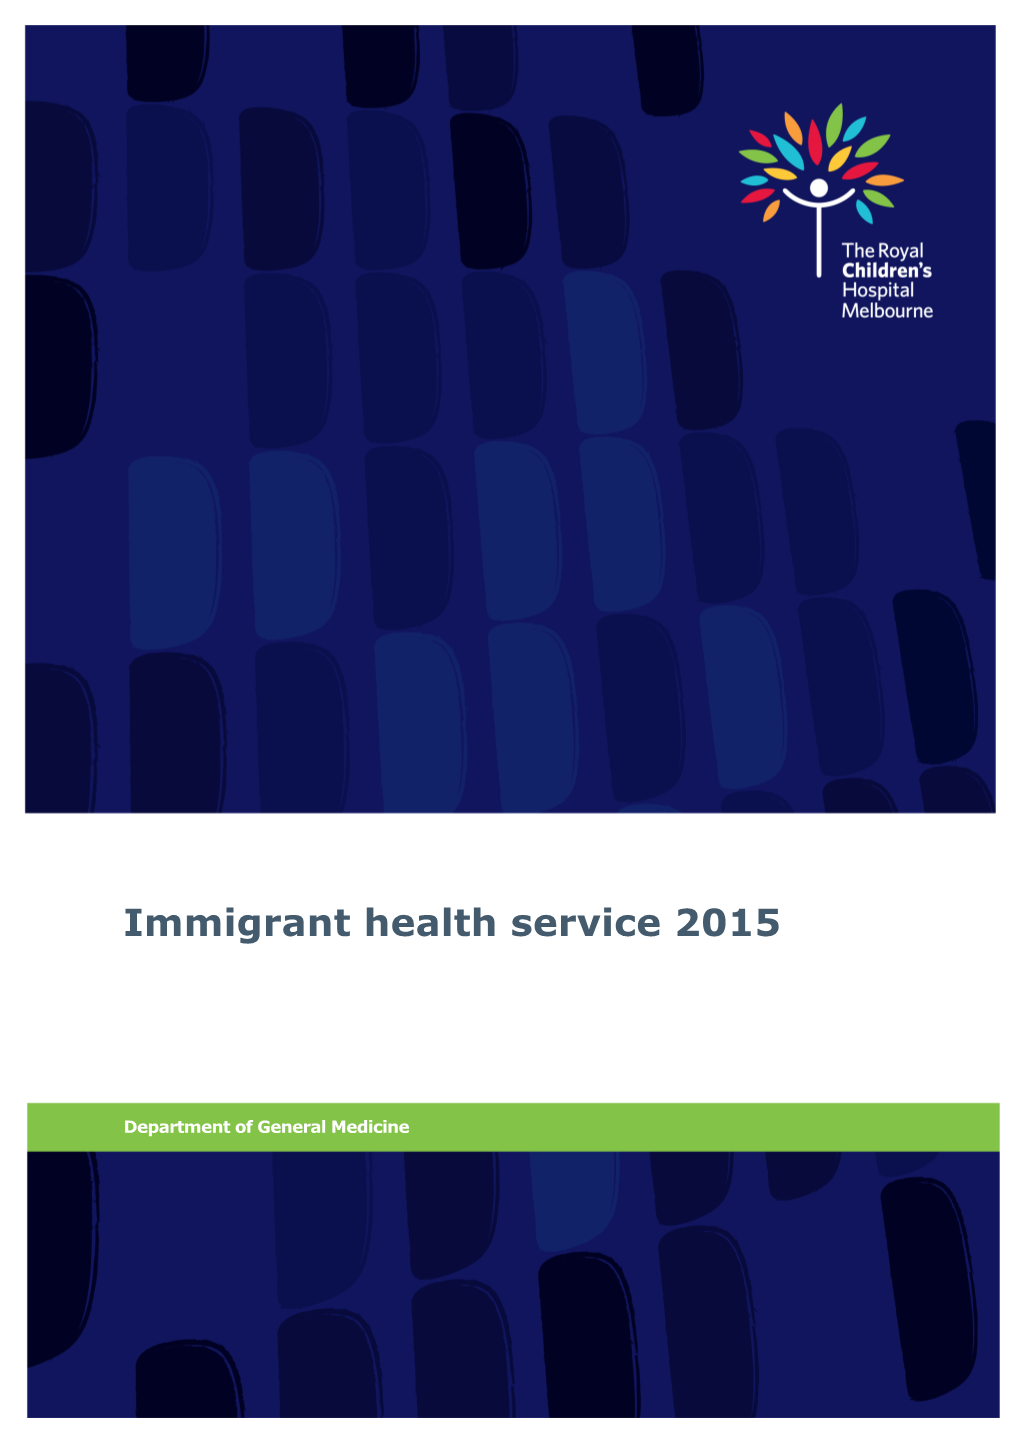 Immigrant Health Service Report 2015